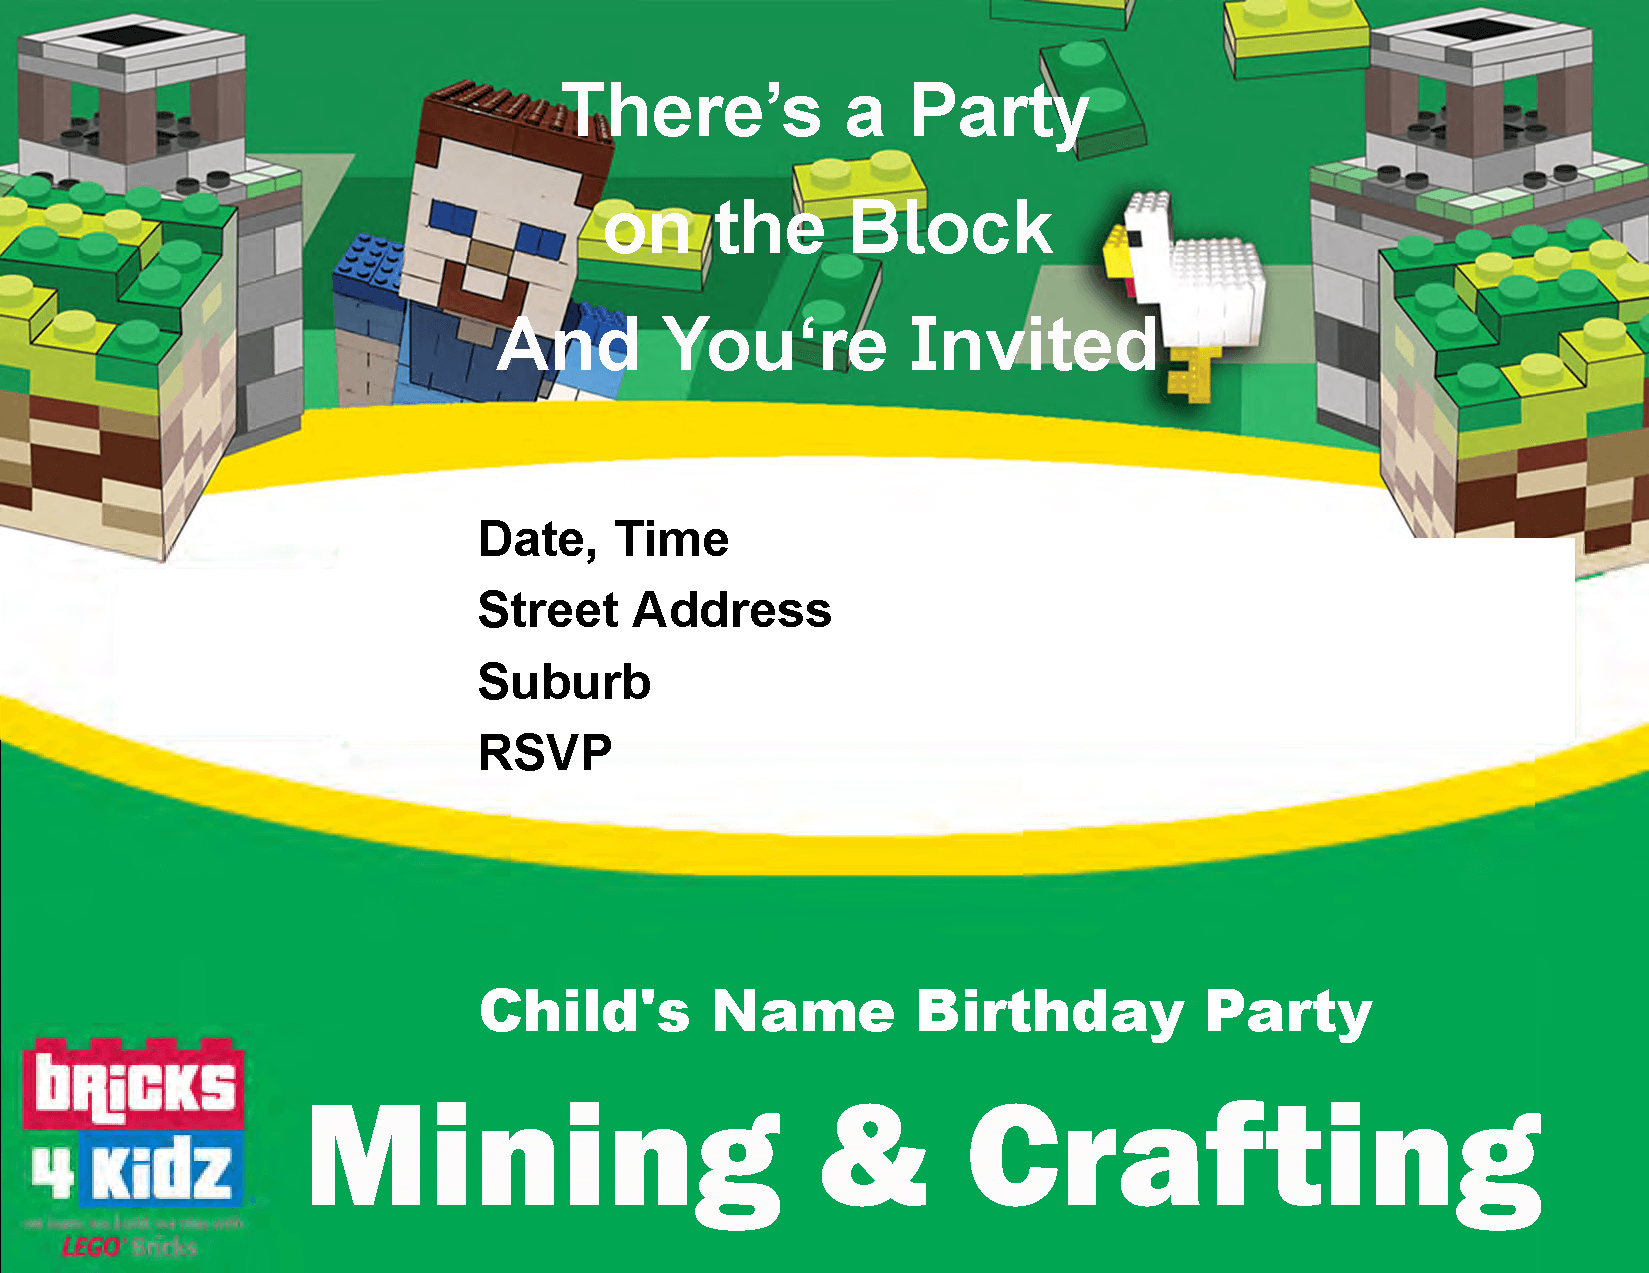 Bricks-4-kidz-brithday-party invite 2